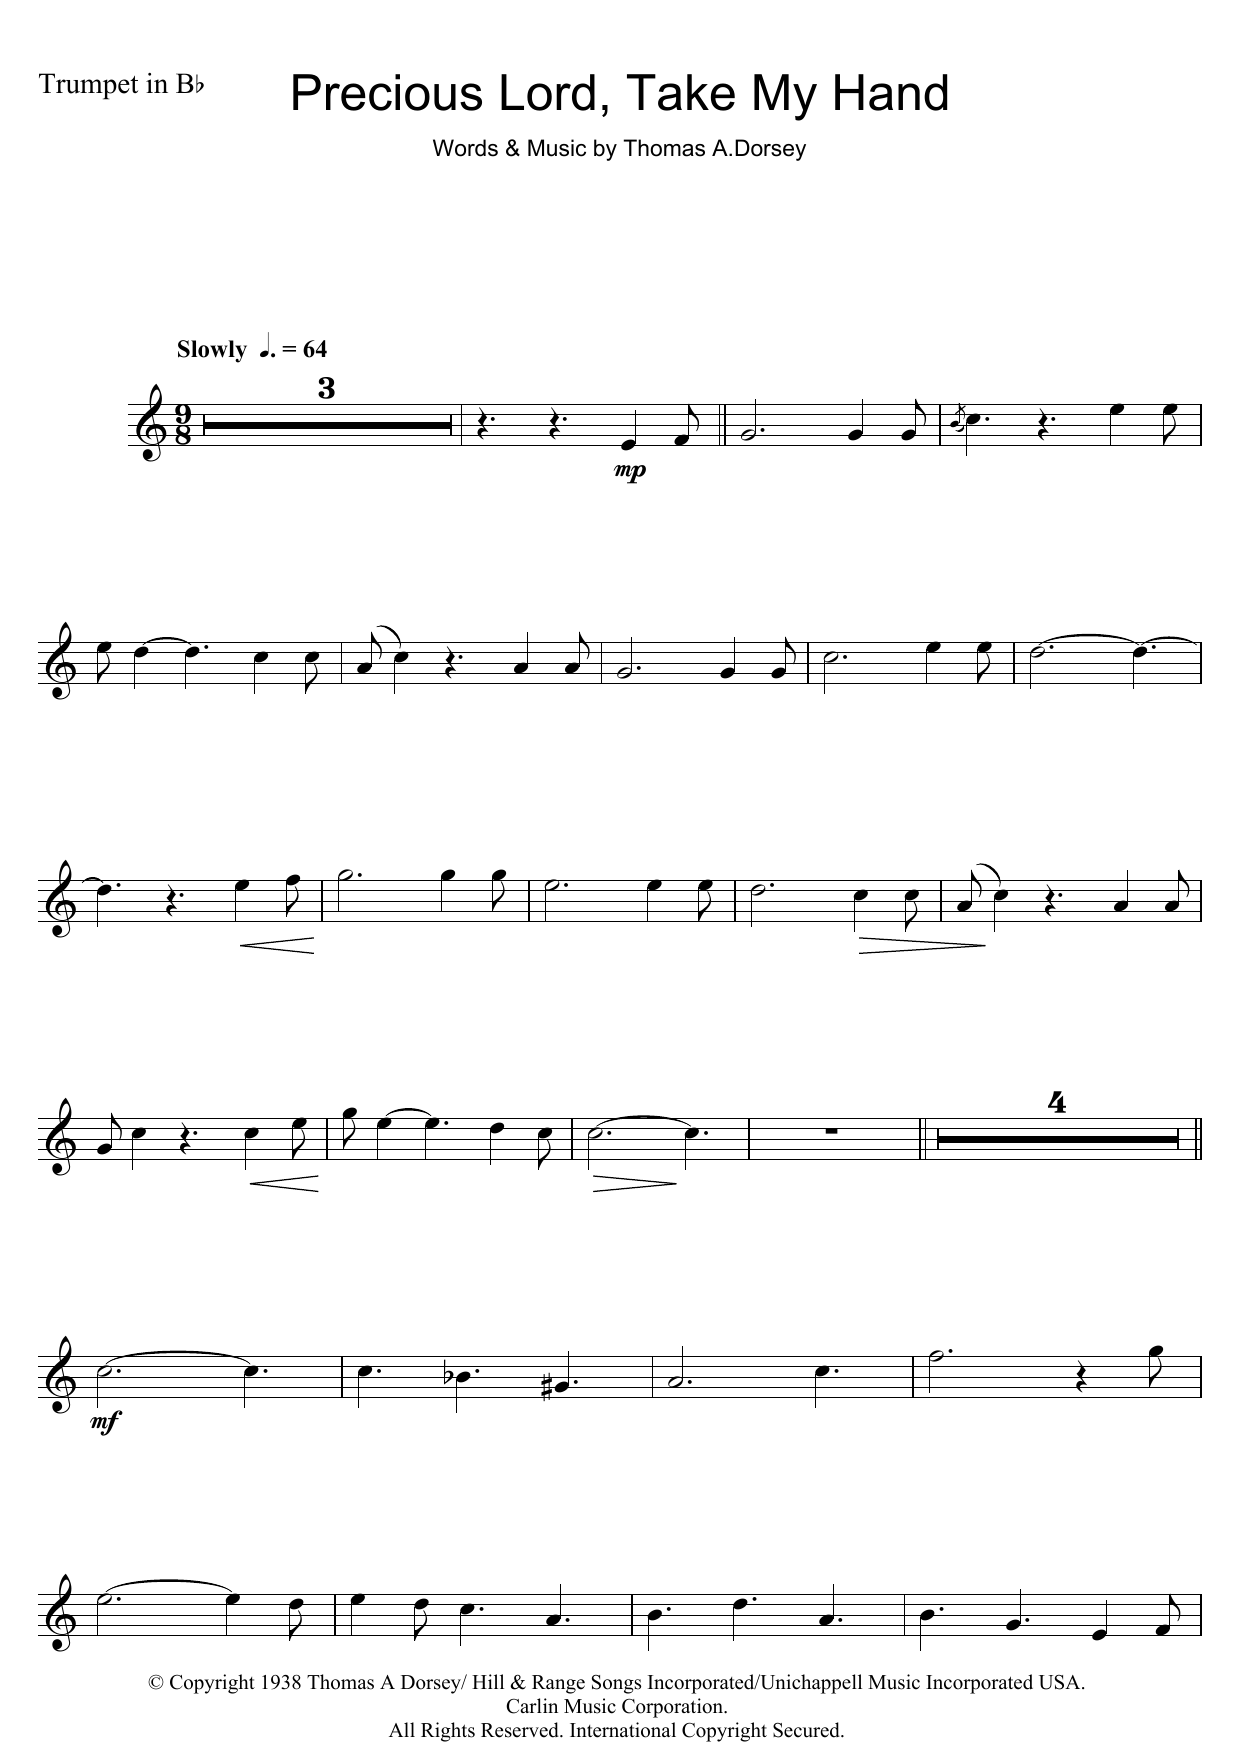 Aretha Franklin Precious Lord, Take My Hand (Take My Hand, Precious Lord) sheet music notes and chords arranged for Tenor Sax Solo